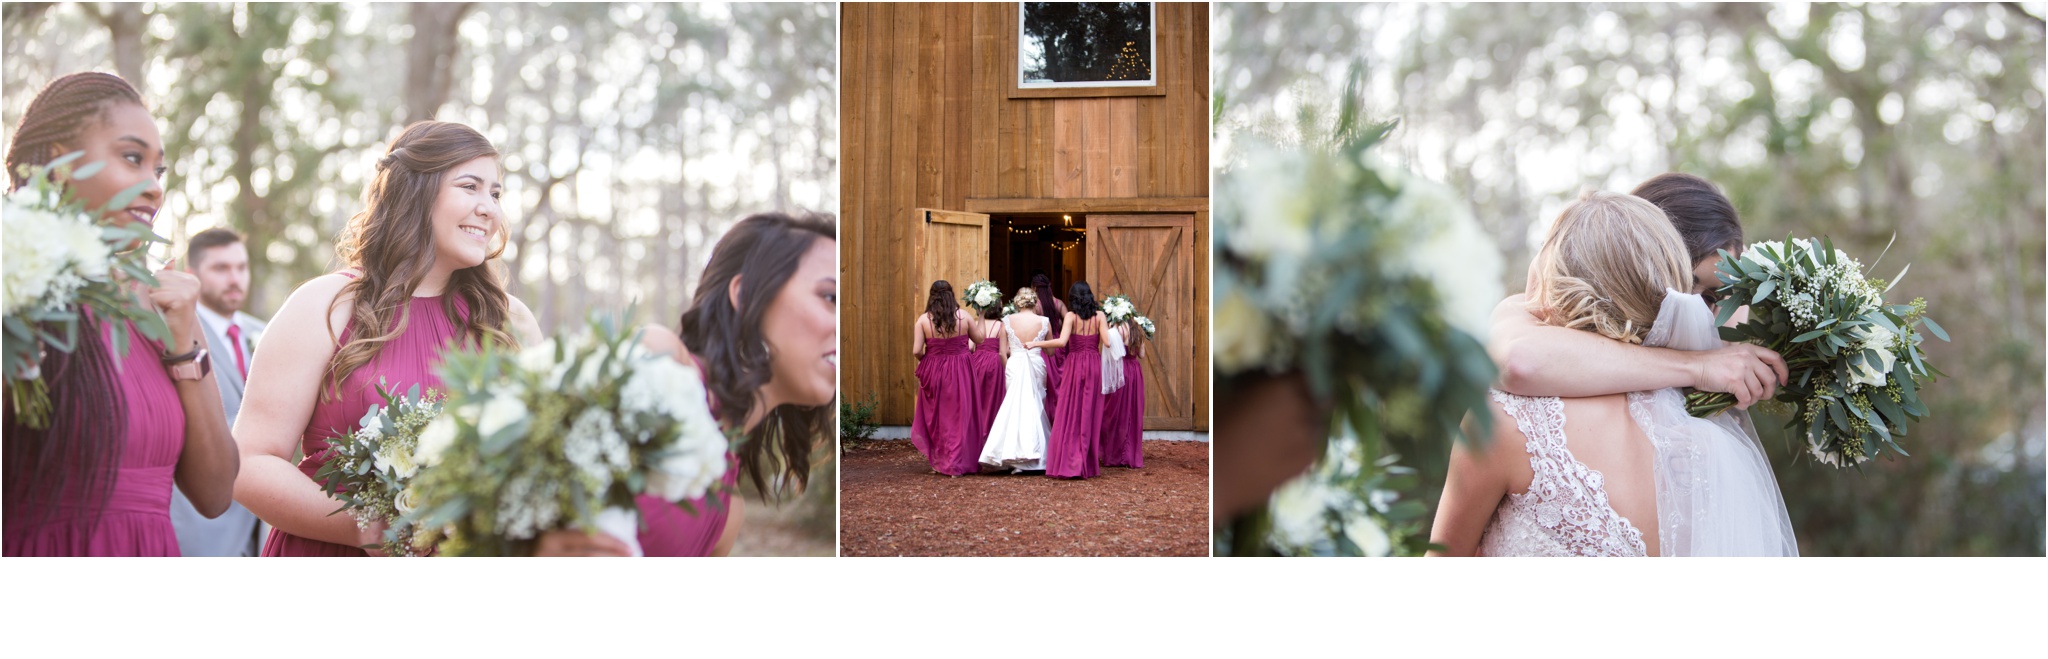 Rainey_Gregg_Photography_St._Simons_Island_Georgia_California_Wedding_Portrait_Photography_0534.jpg